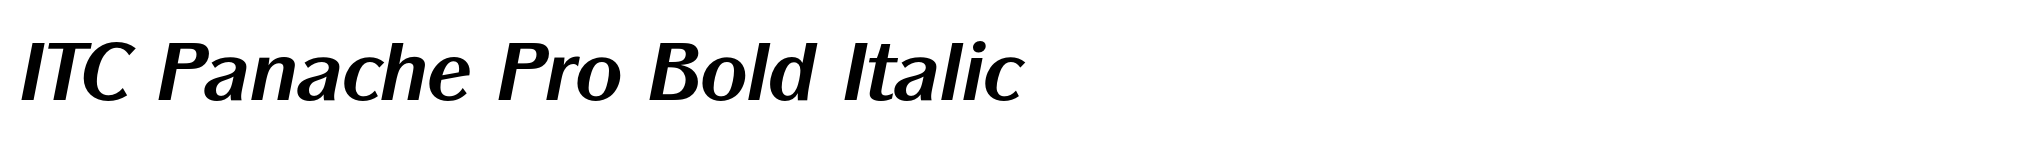 ITC Panache Pro Bold Italic image